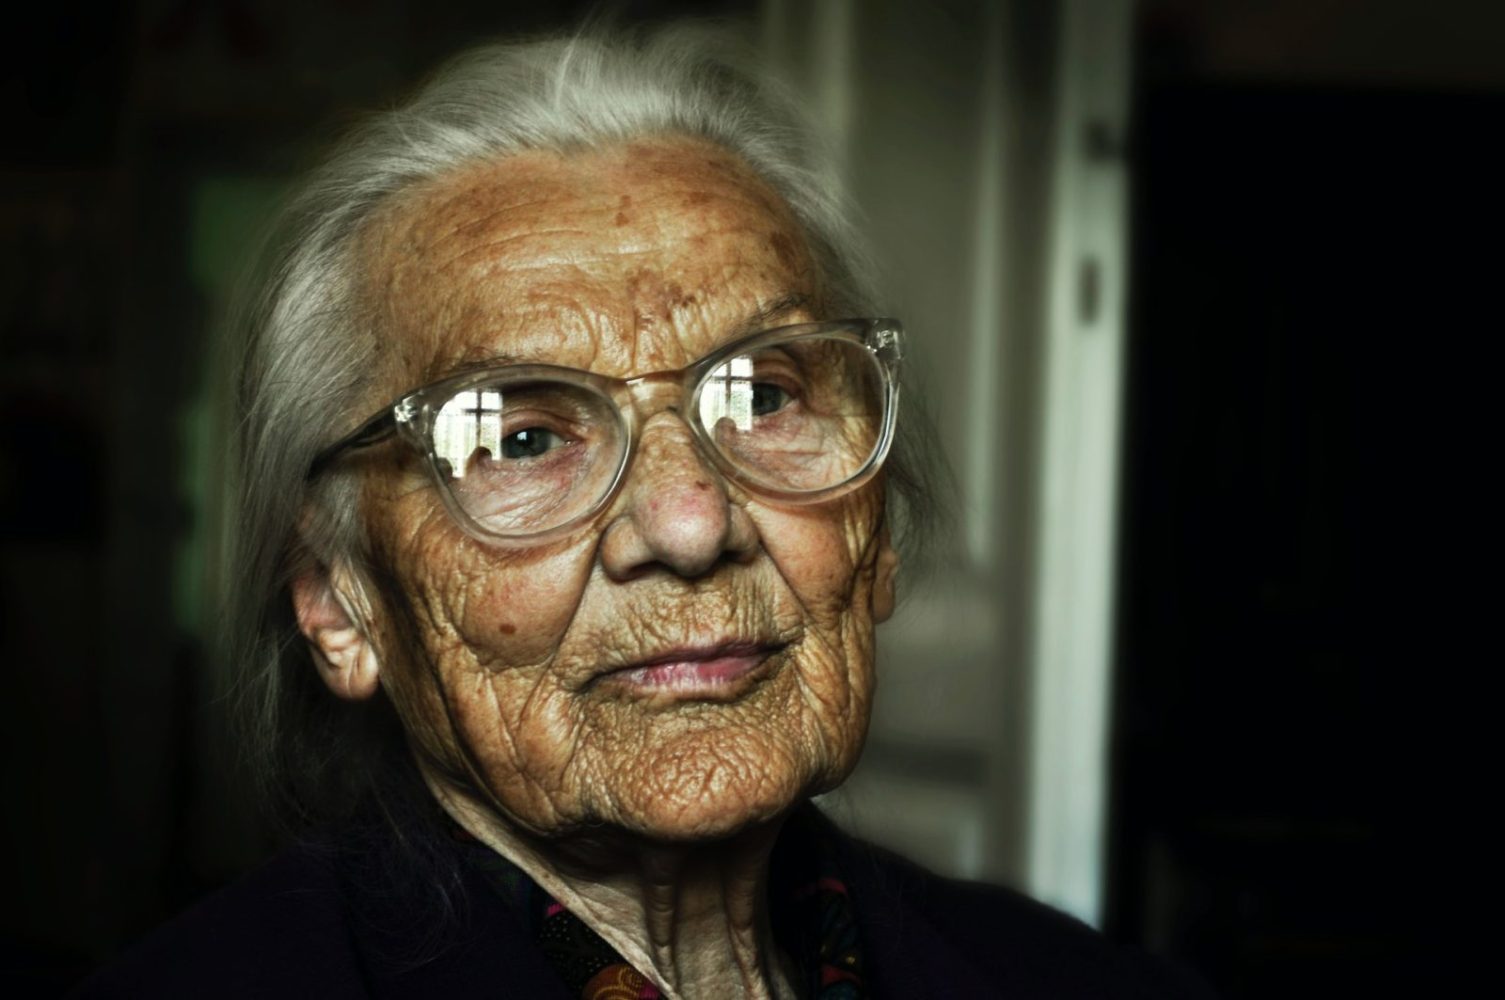 Tužna priča bake iz Hrvatske: Bog vidi tko se s kim kako ponaša